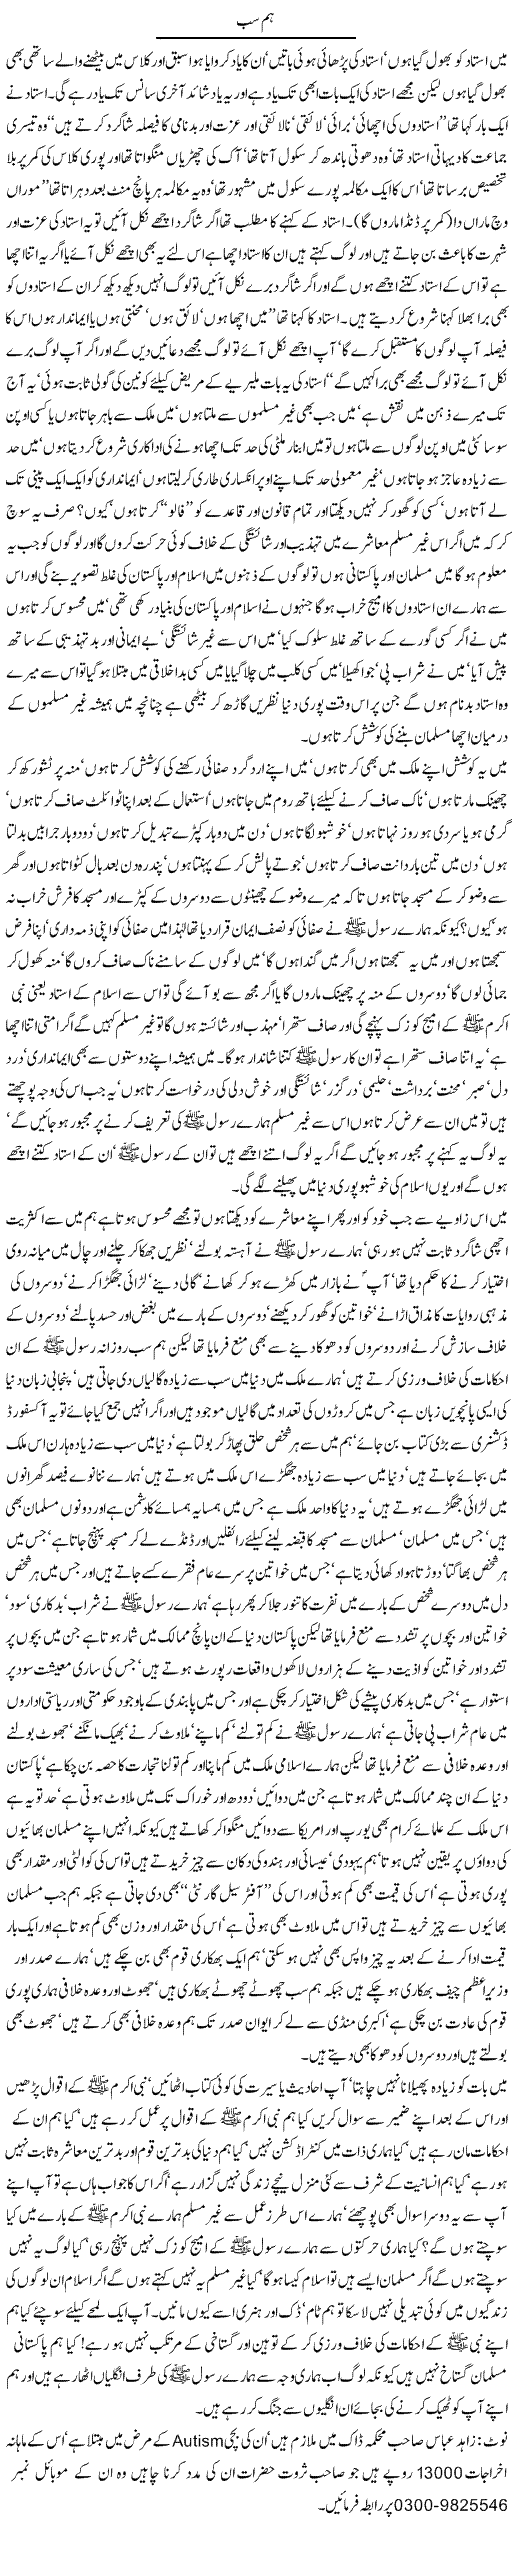 Muslims Image Express Column Javed Chaudhry 11 January 2011